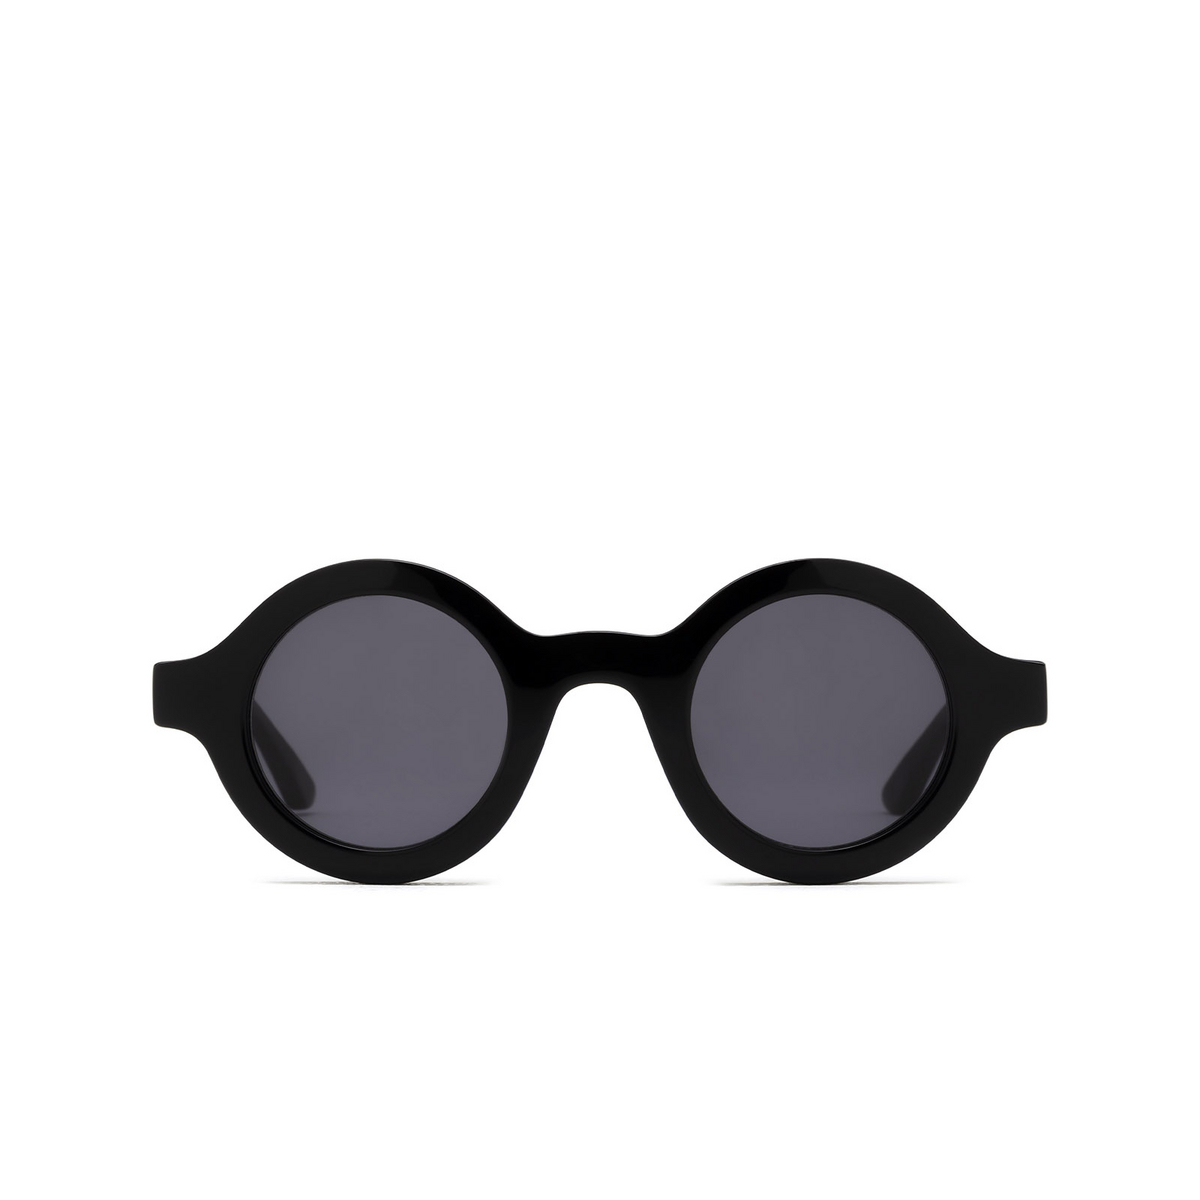 Huma® Round Sunglasses: Myo color Black 06 - front view.